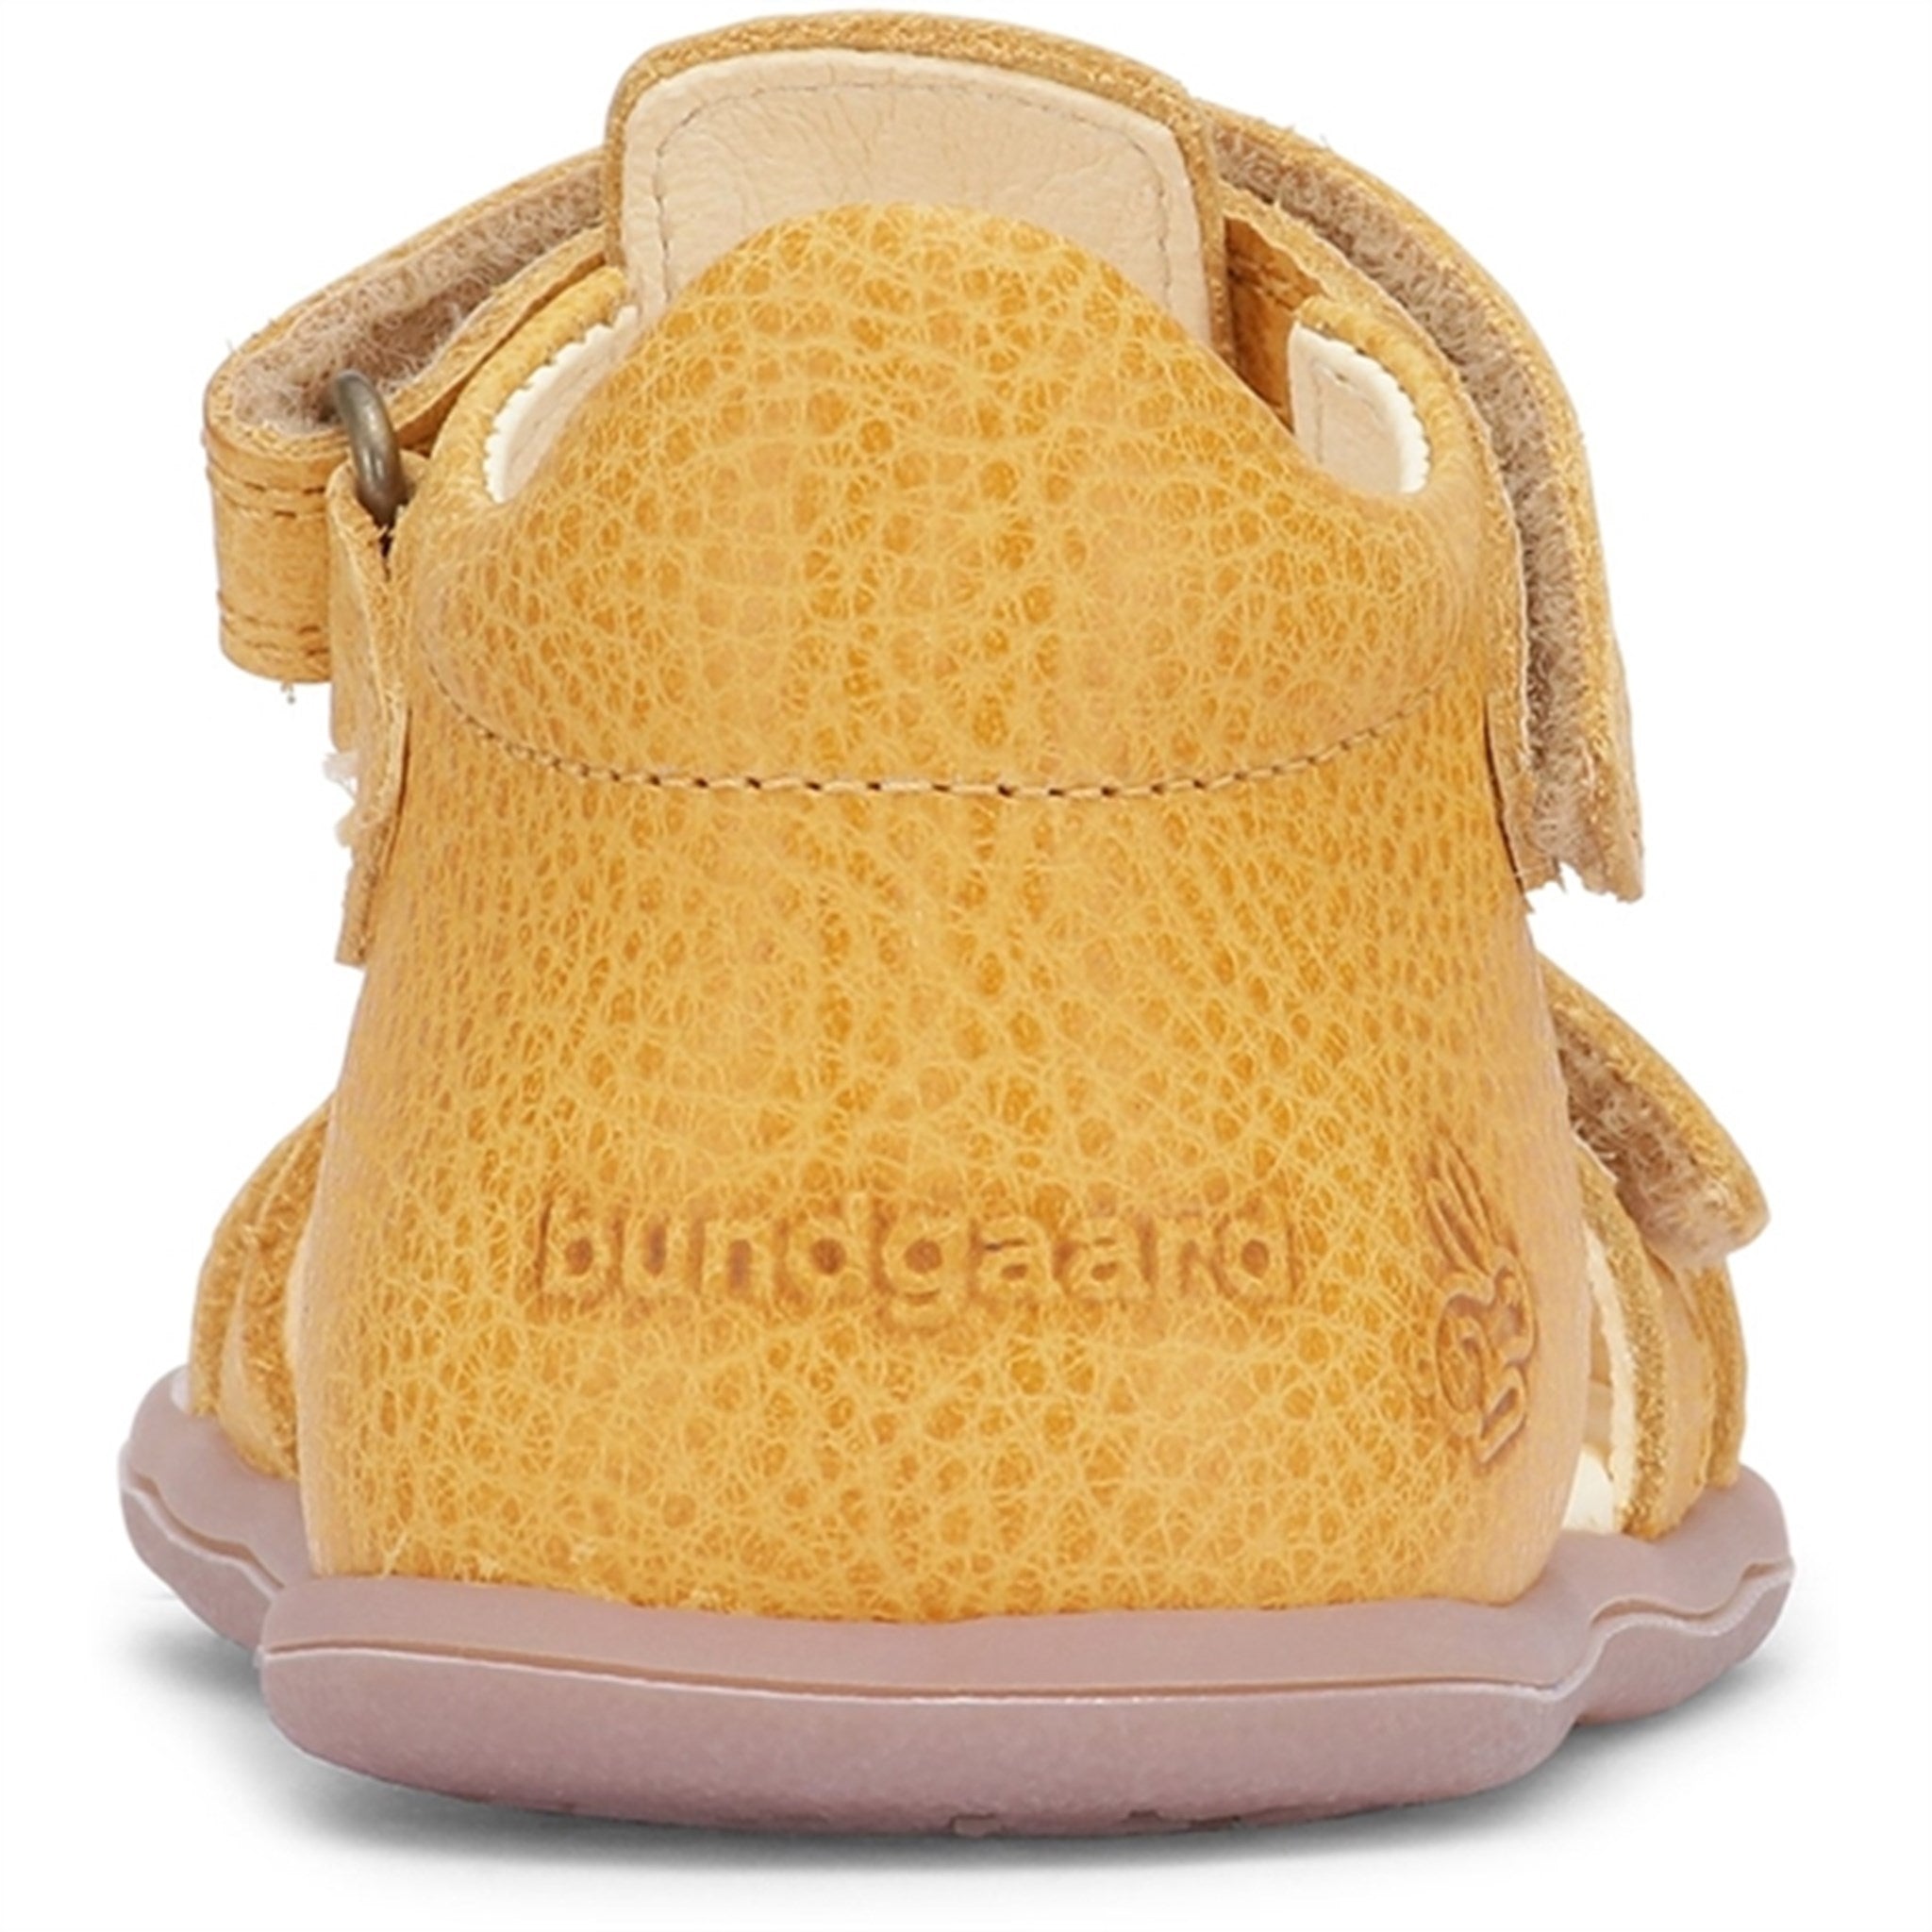 Bundgaard Rox IV Sandal Mustard G 3